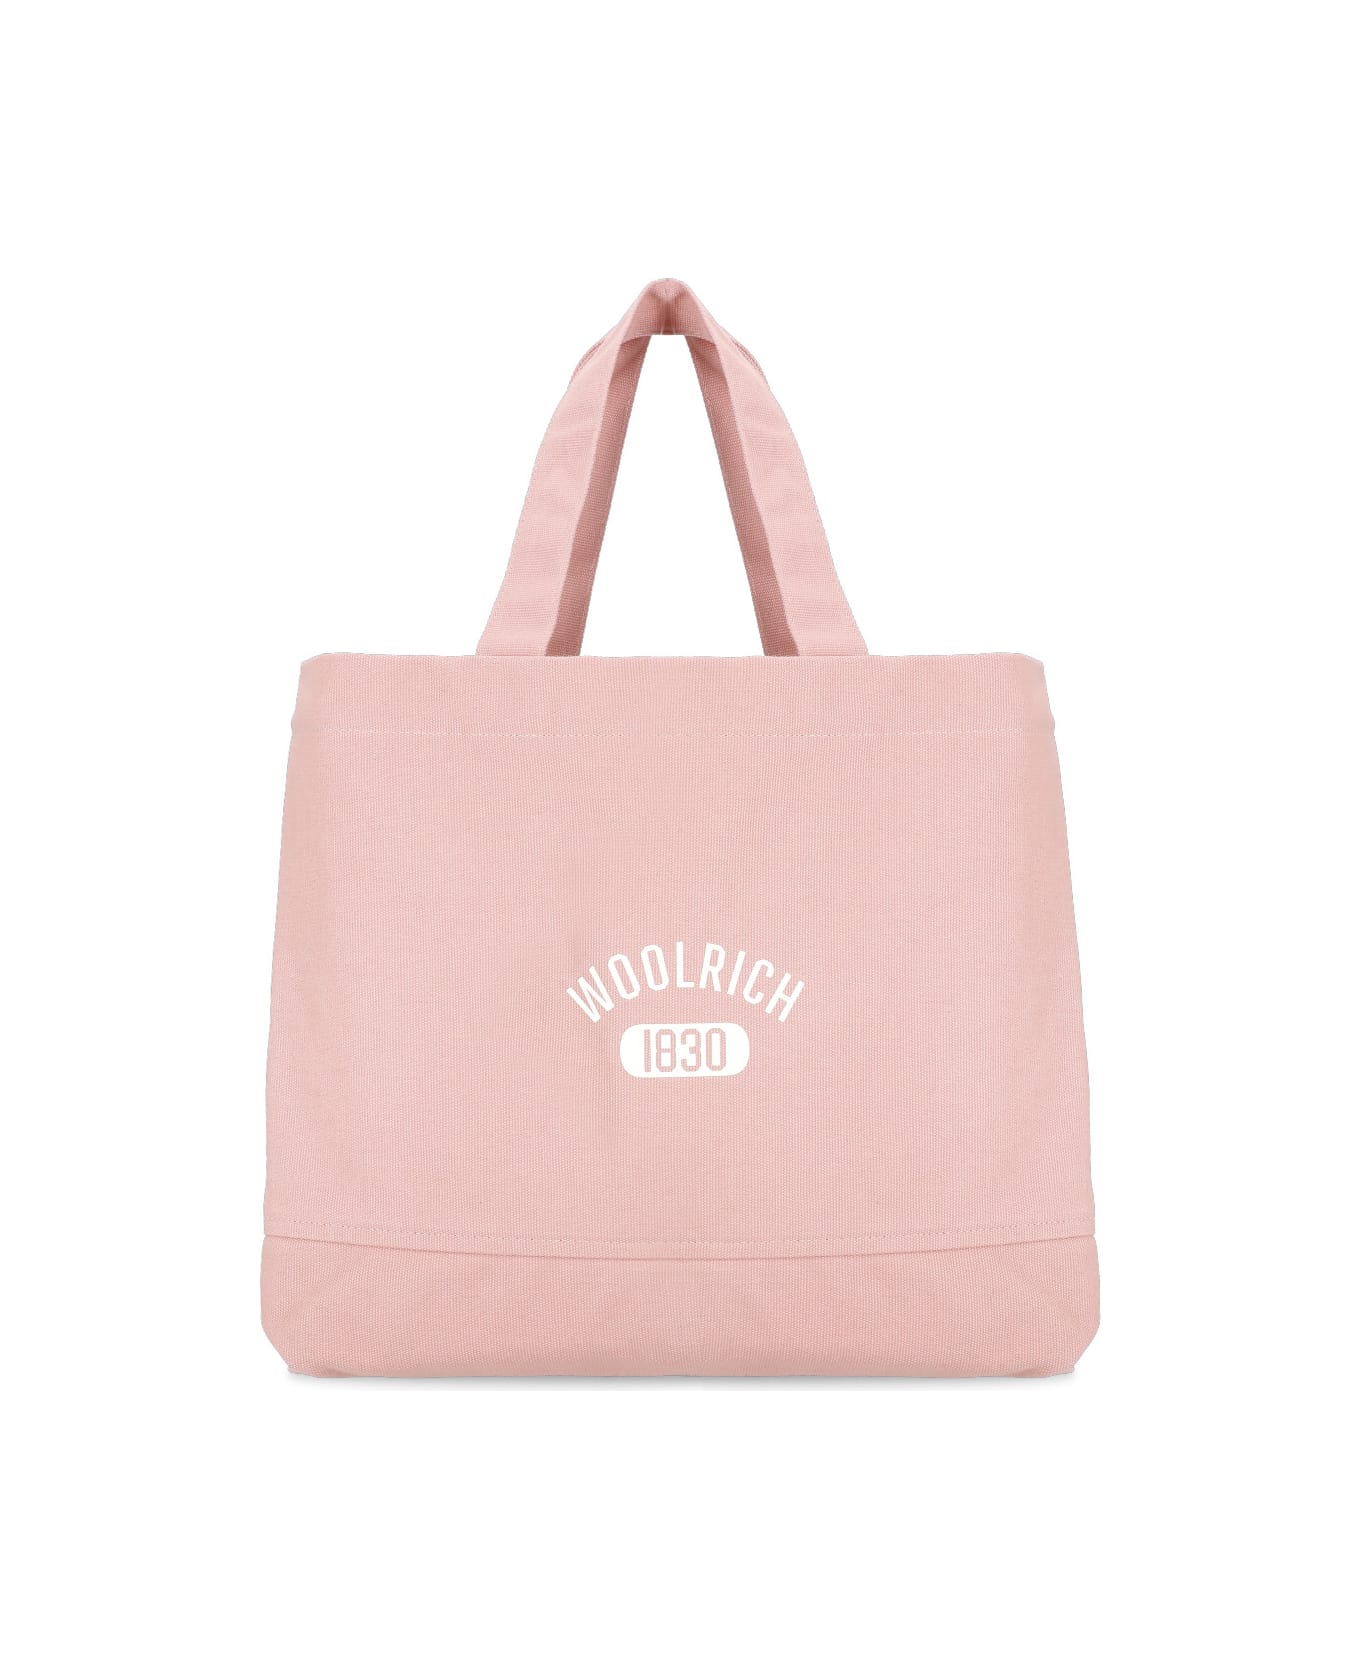 Woolrich Shopper Tote Bag - Pink